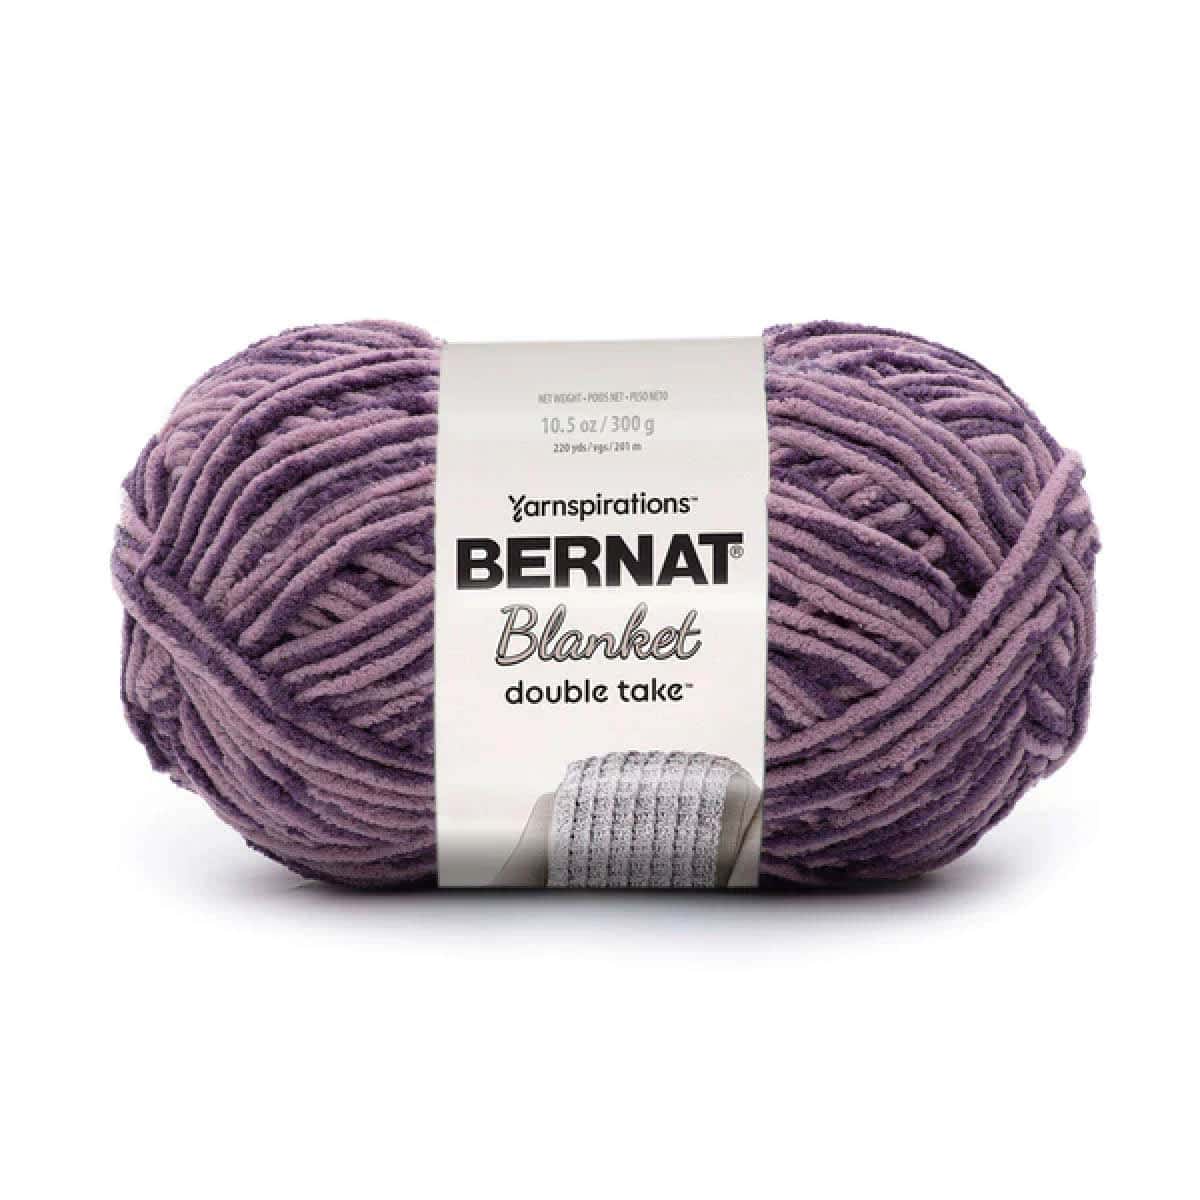 Bernat Blanket Double Take Yarn Product